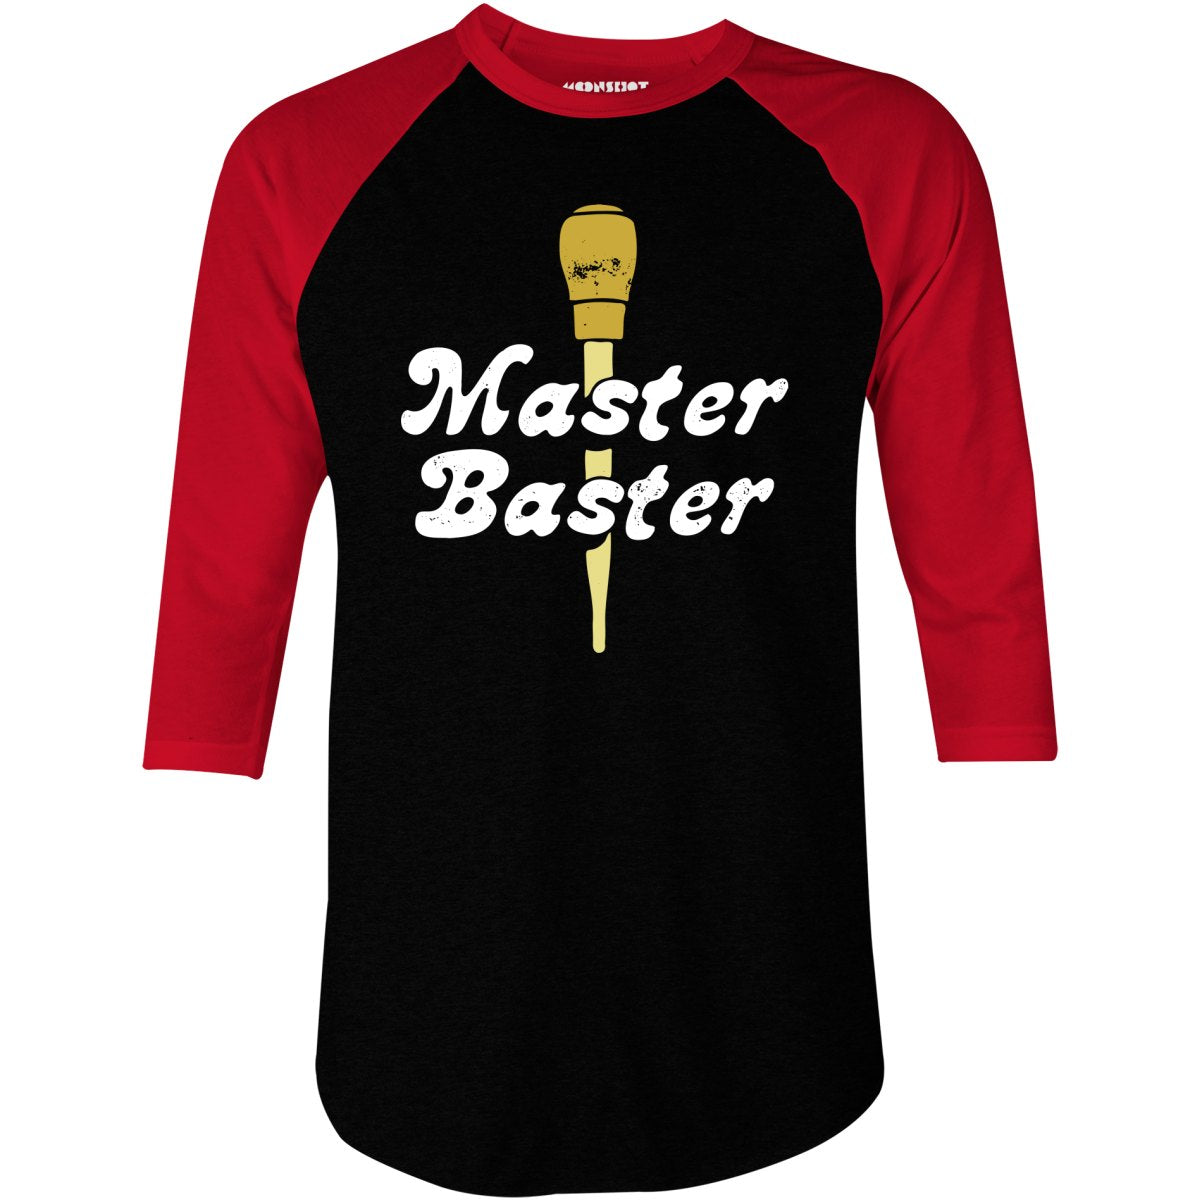 Master Baster - 3/4 Sleeve Raglan T-Shirt